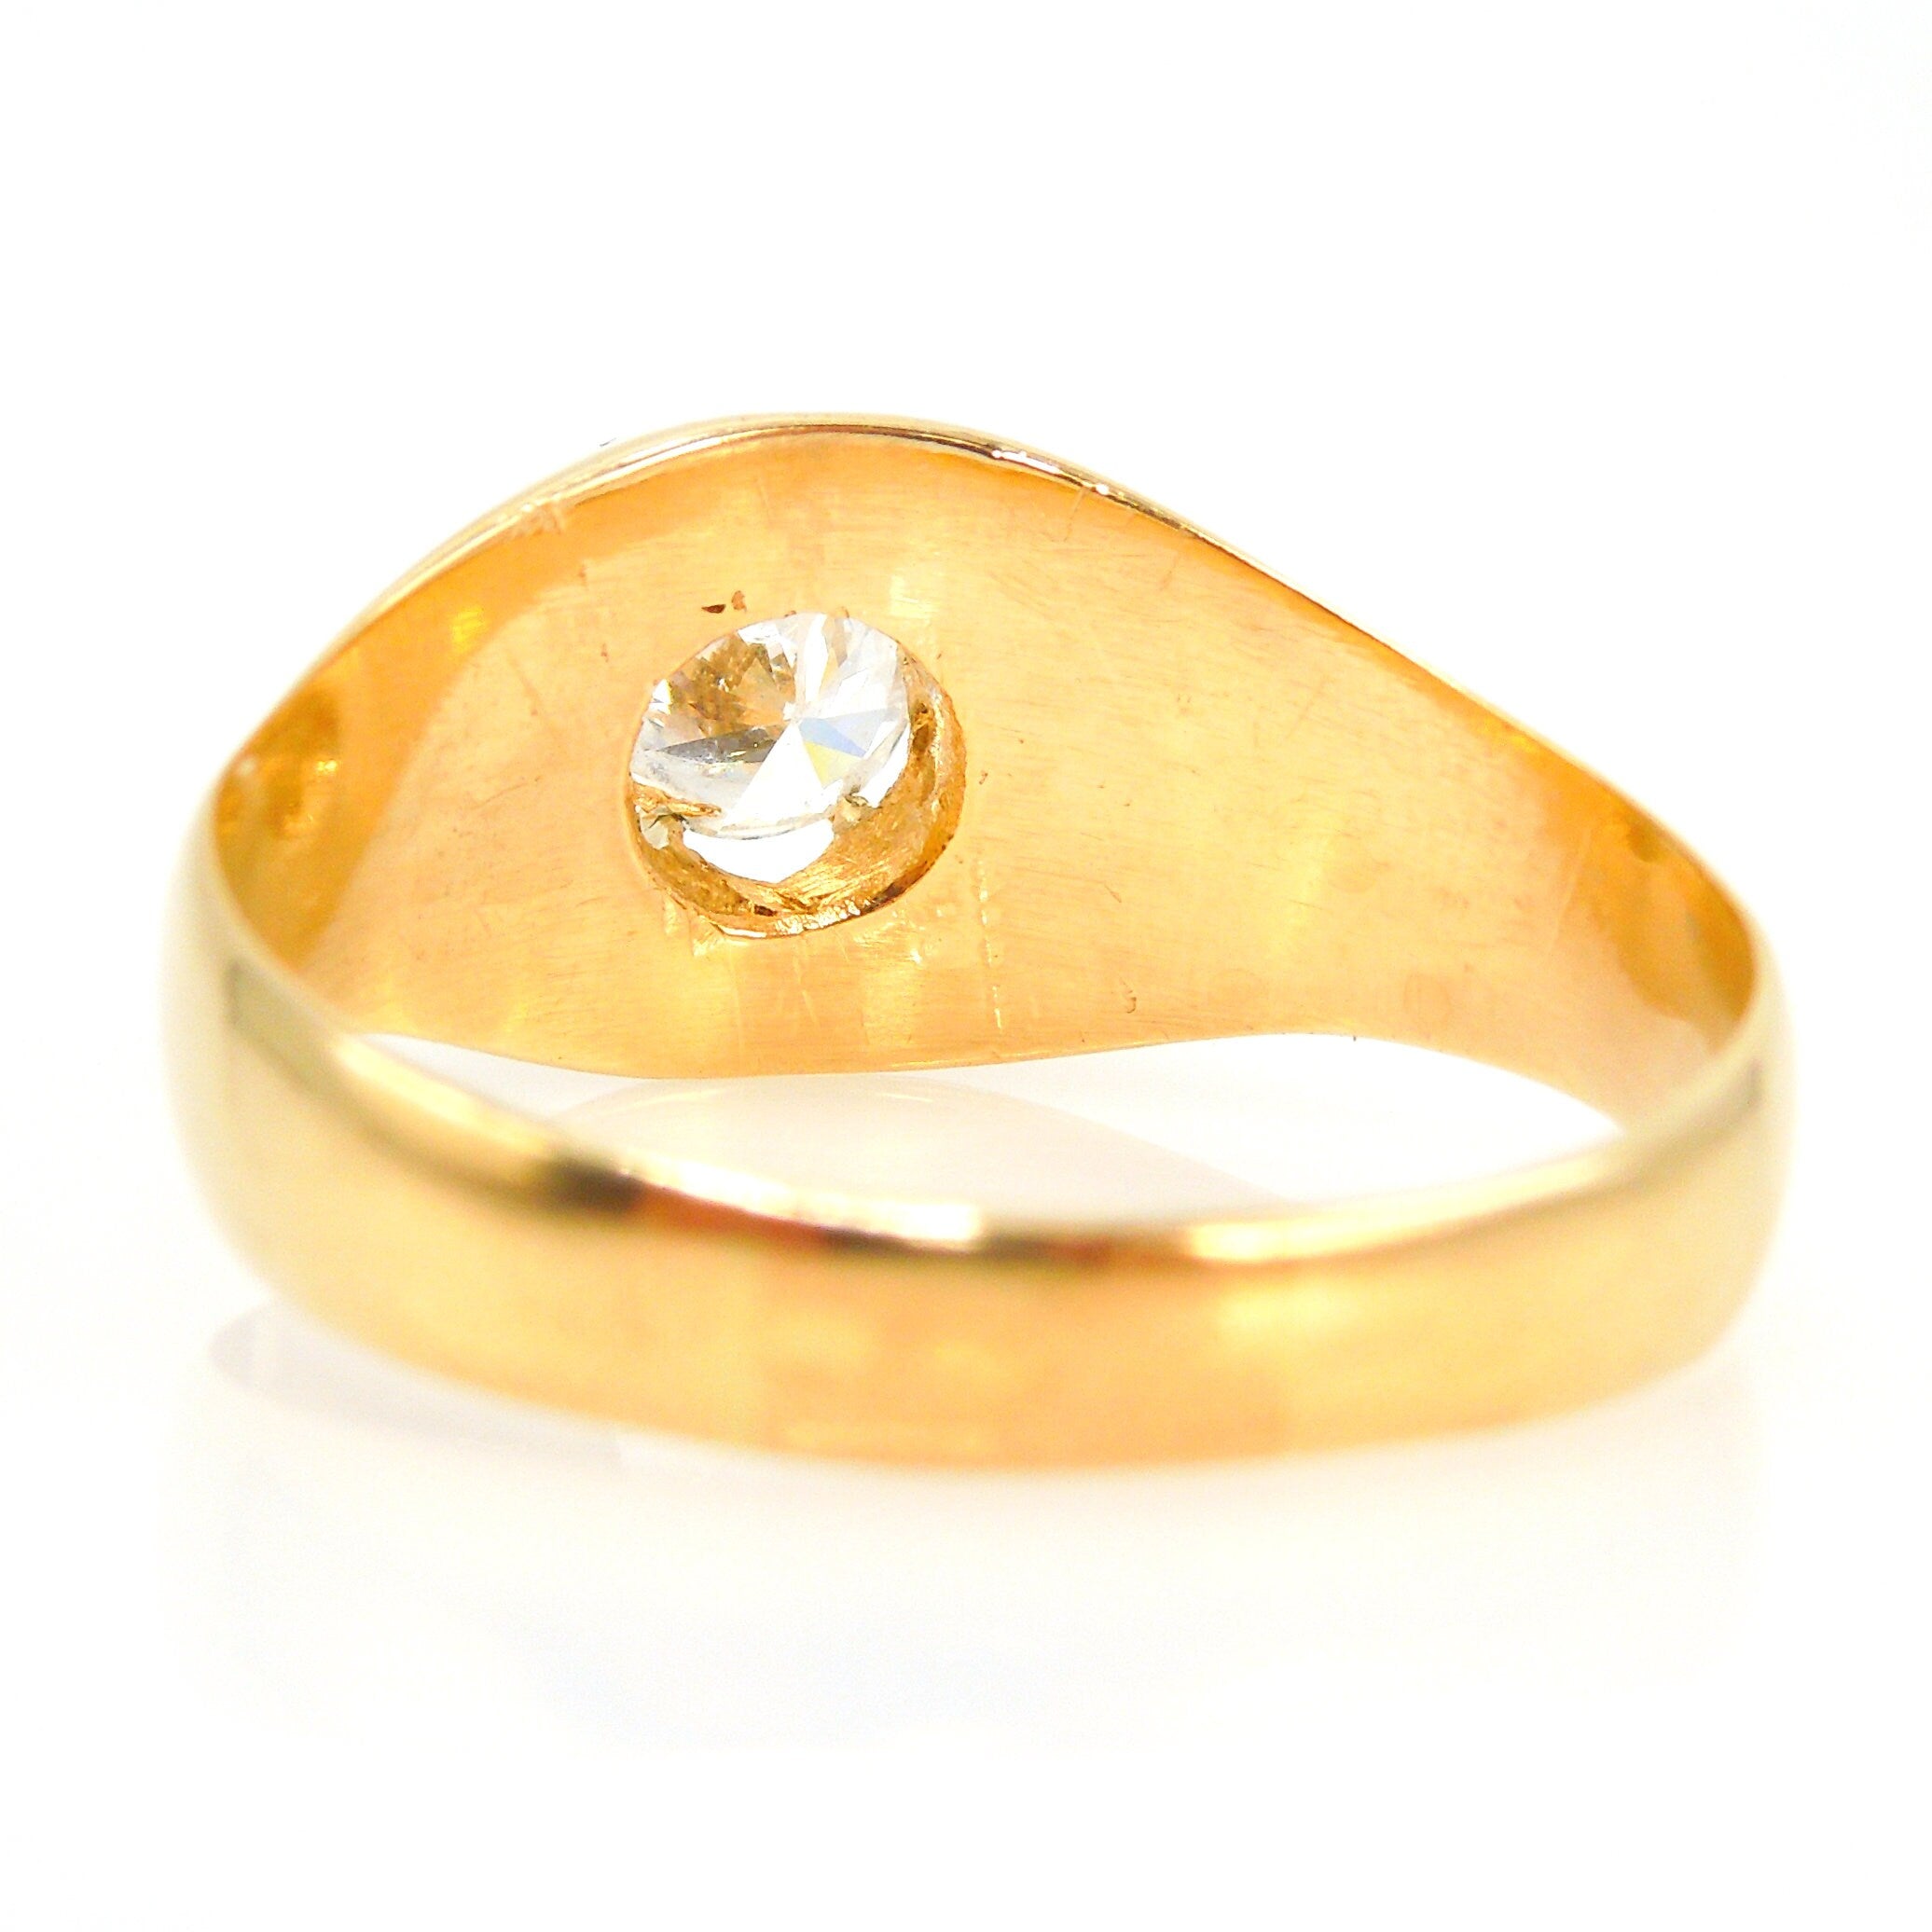 Nearly Half Carat Diamond Belcher Ring in 14K Yellow Gold